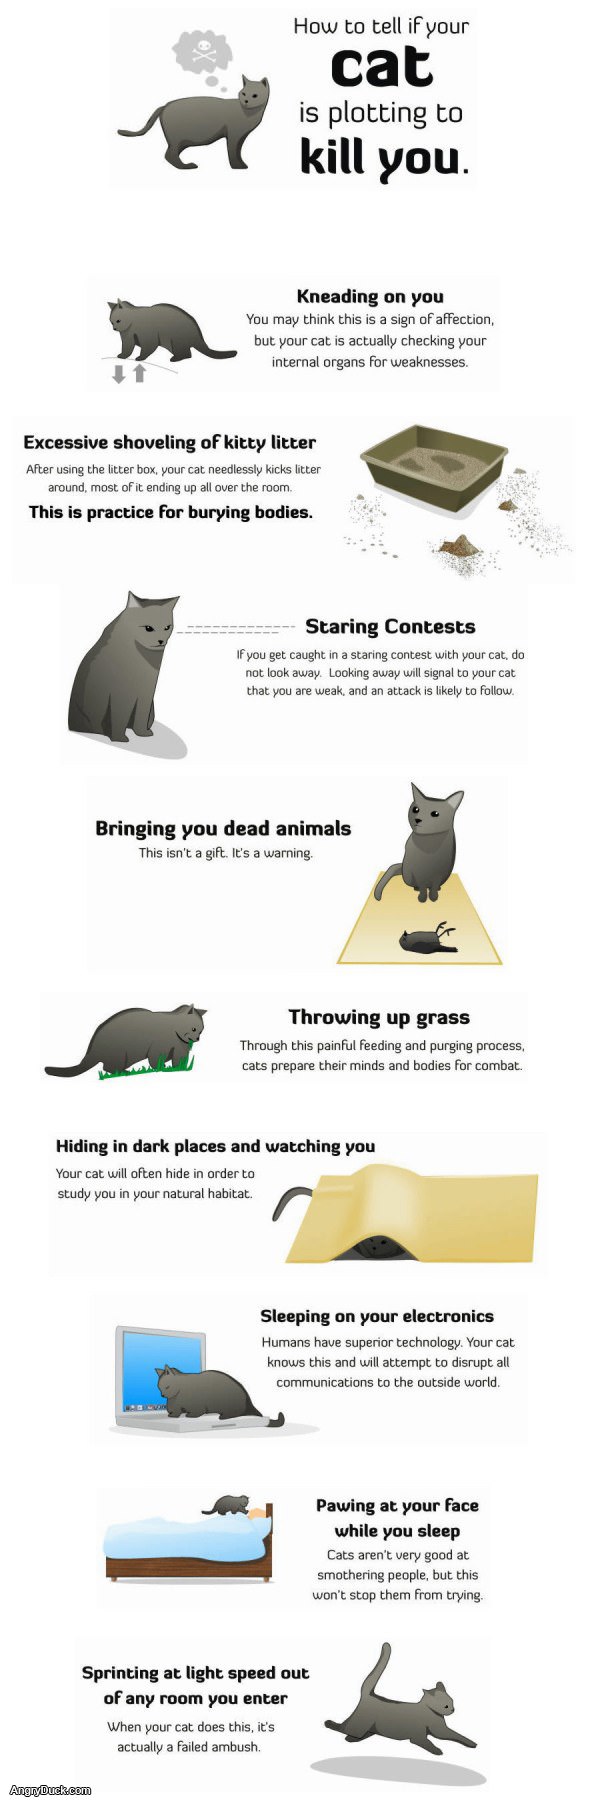 Cat Will Kill You